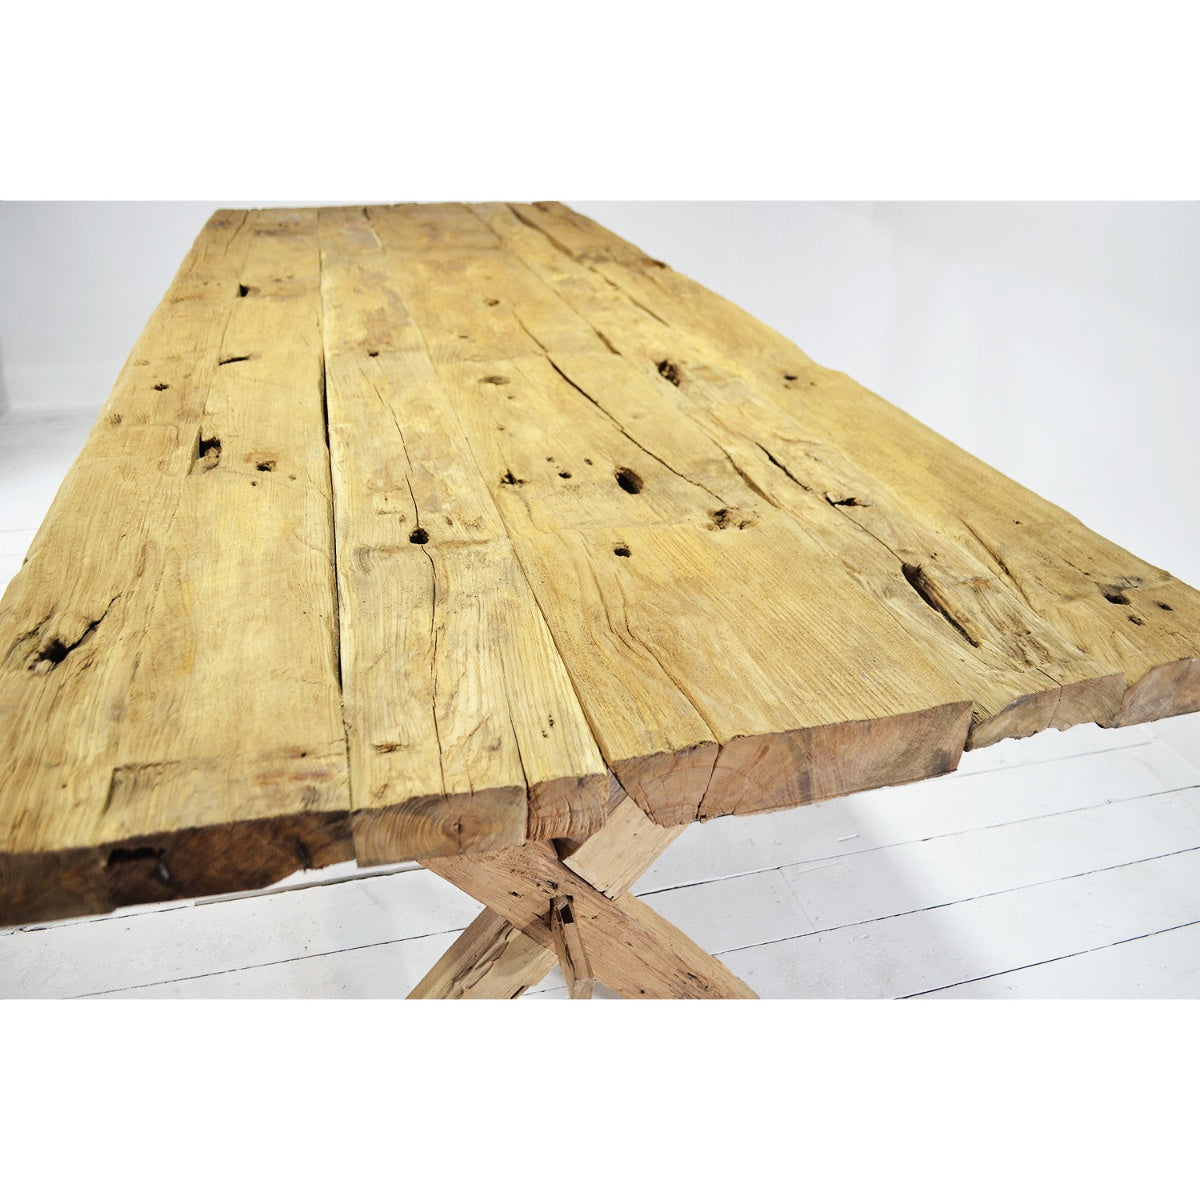 Rustic Teak Timber Cross Leg Dining Table 2.5m x 1m